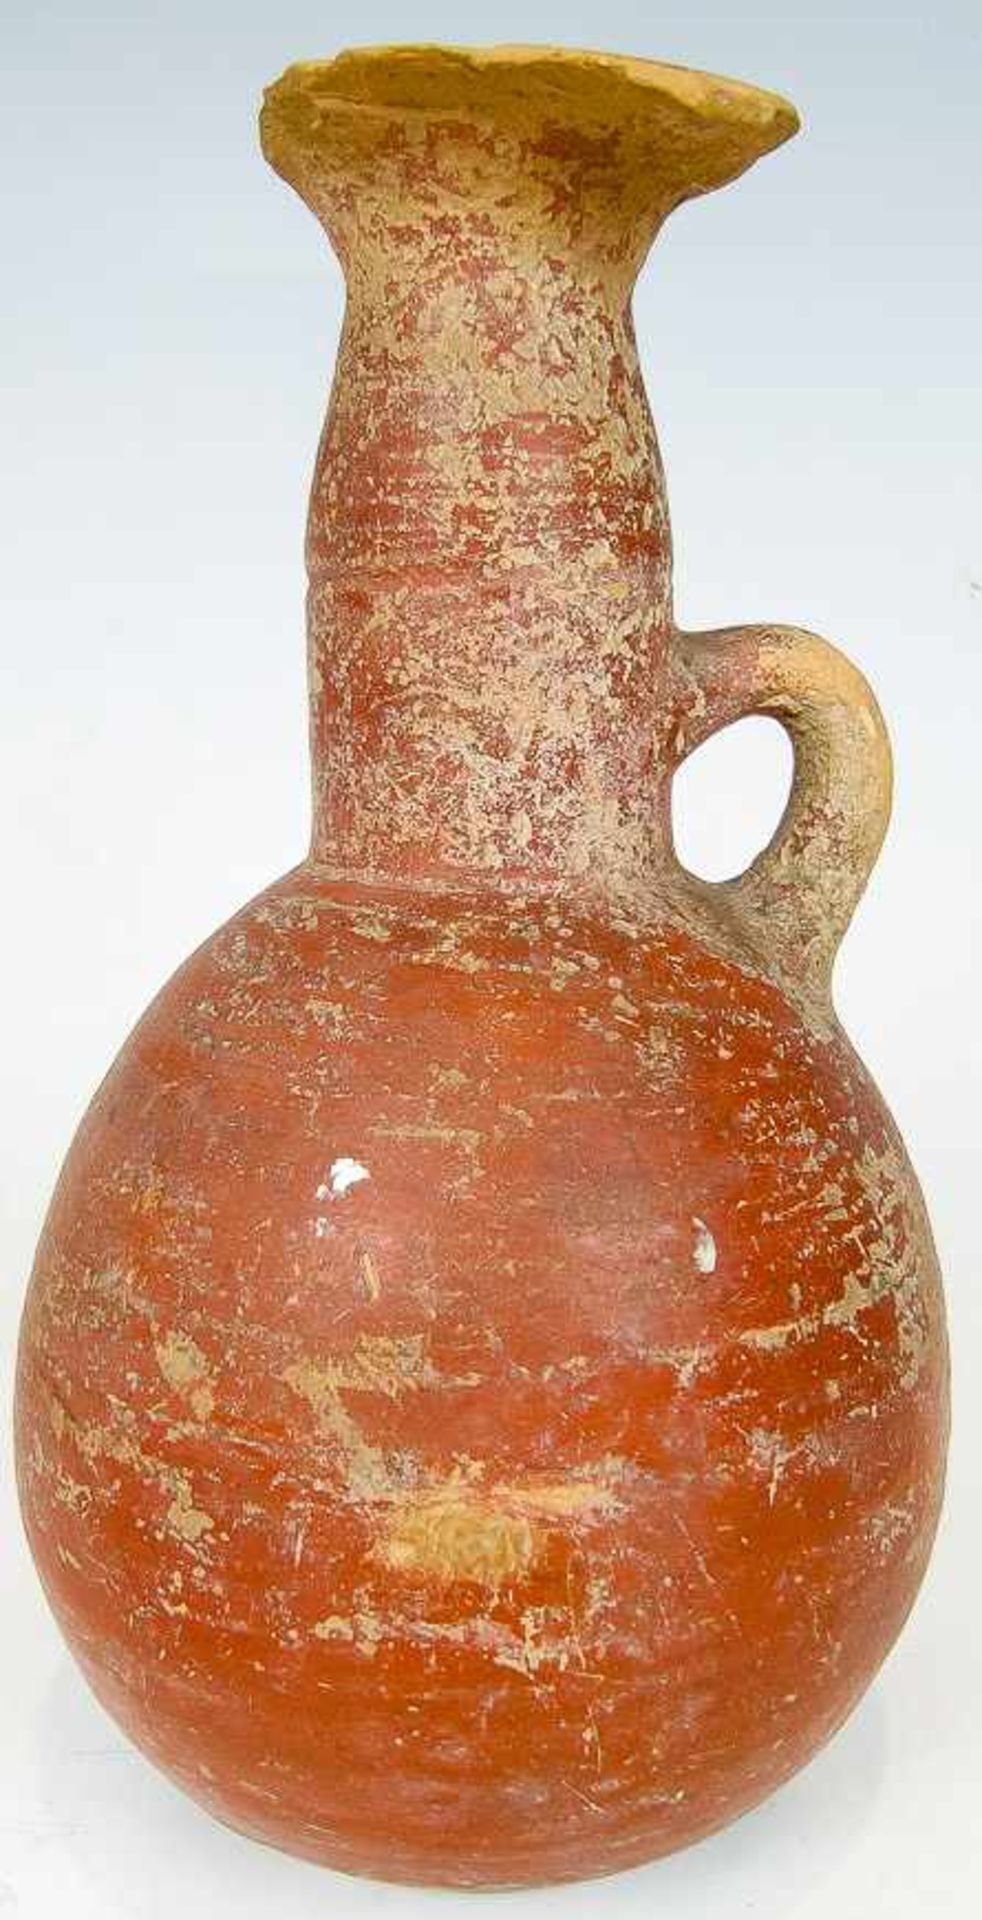 KanneZypern, 7. Jh. v . Chr.Bräunlicher Ton mit poliertem, rotem Überzug. Birnenförmiger Gefäßkörper